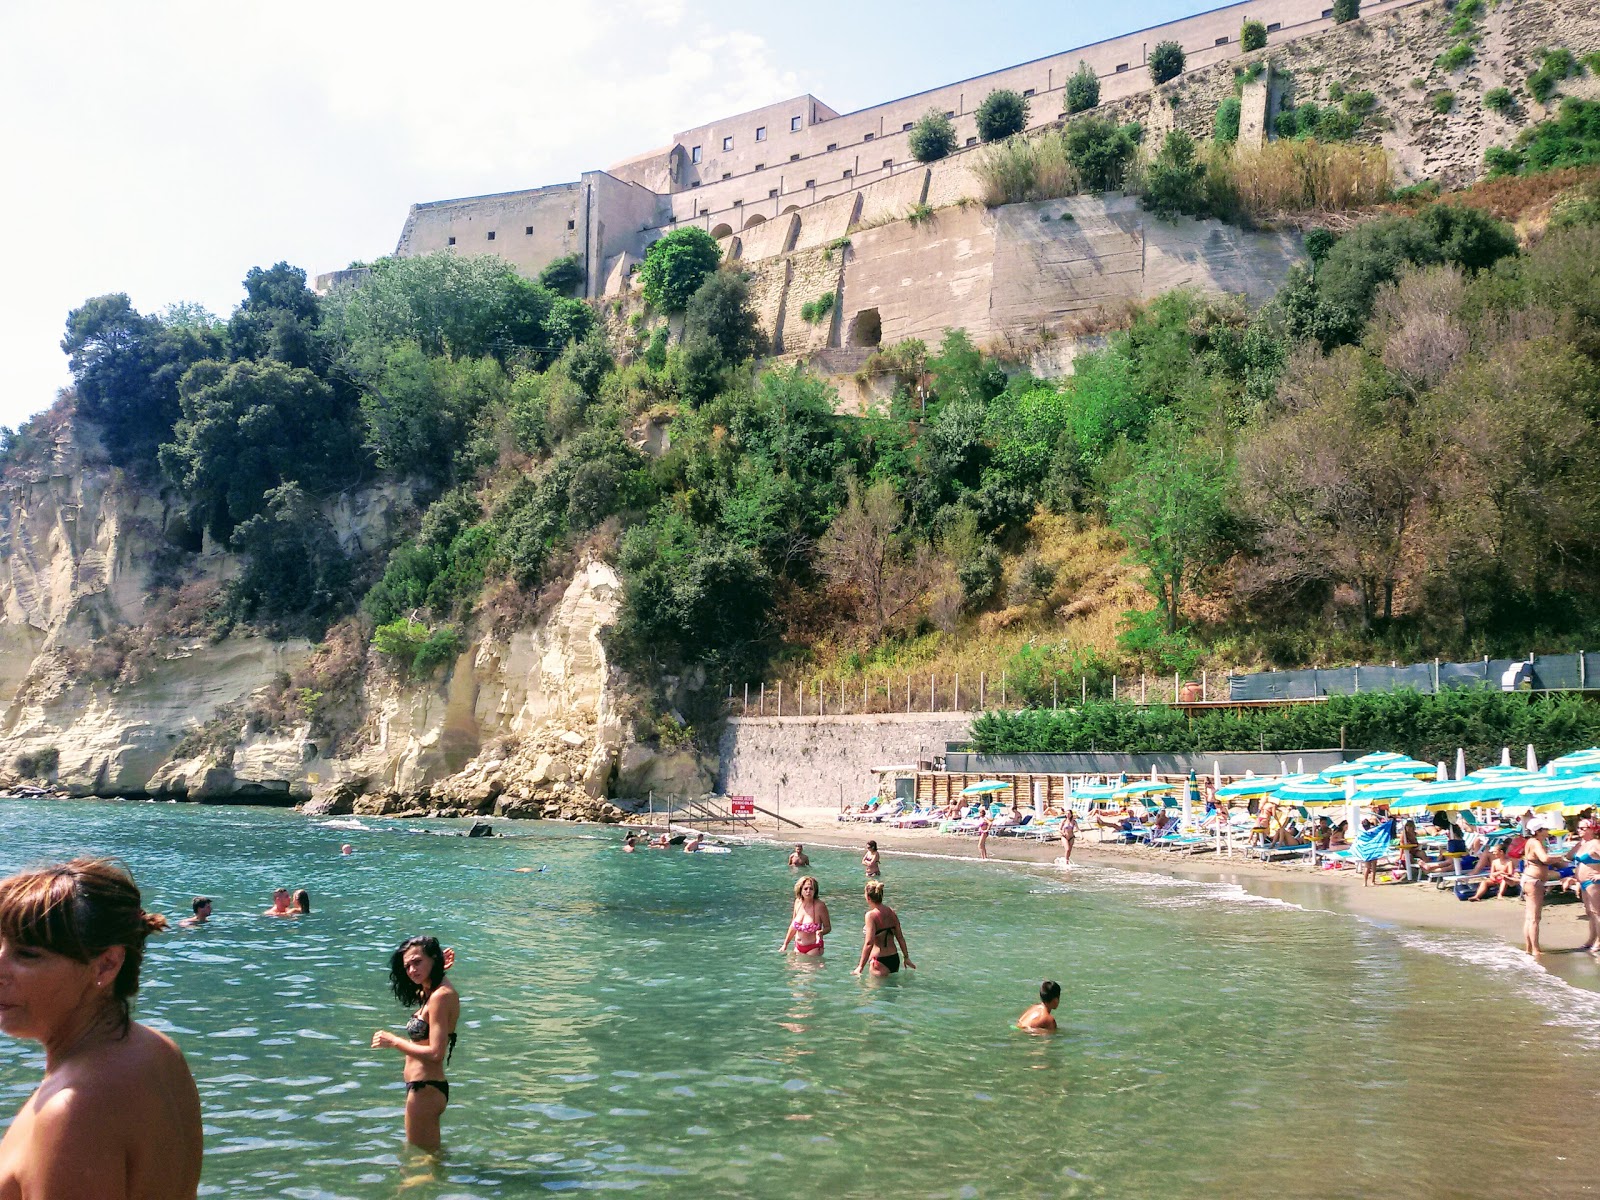 Fotografie cu Spiaggia del Castello di Baia cu o suprafață de apa albastra